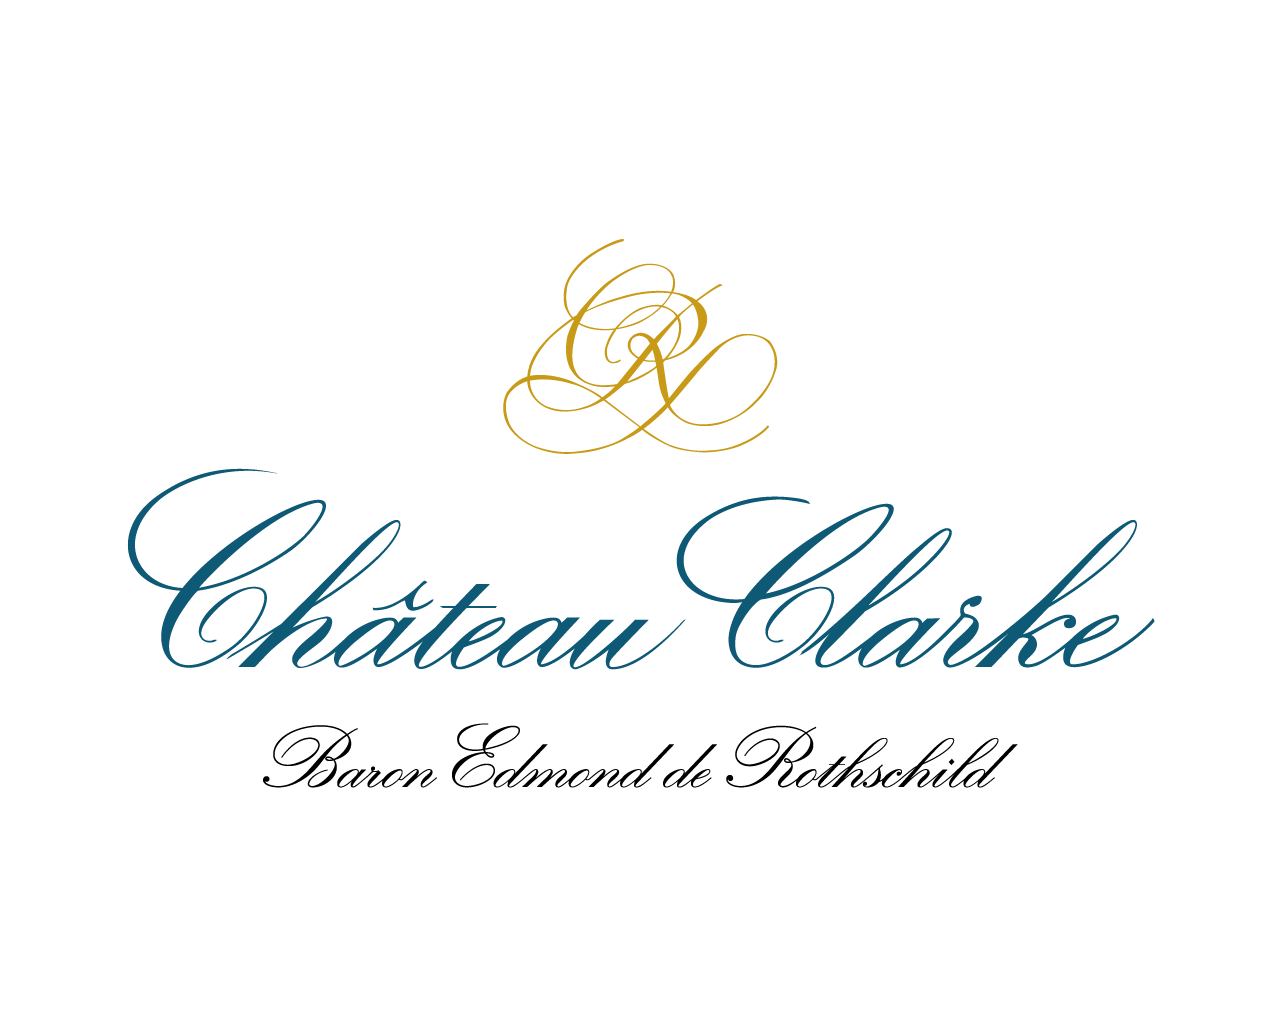 CH. CLARKE